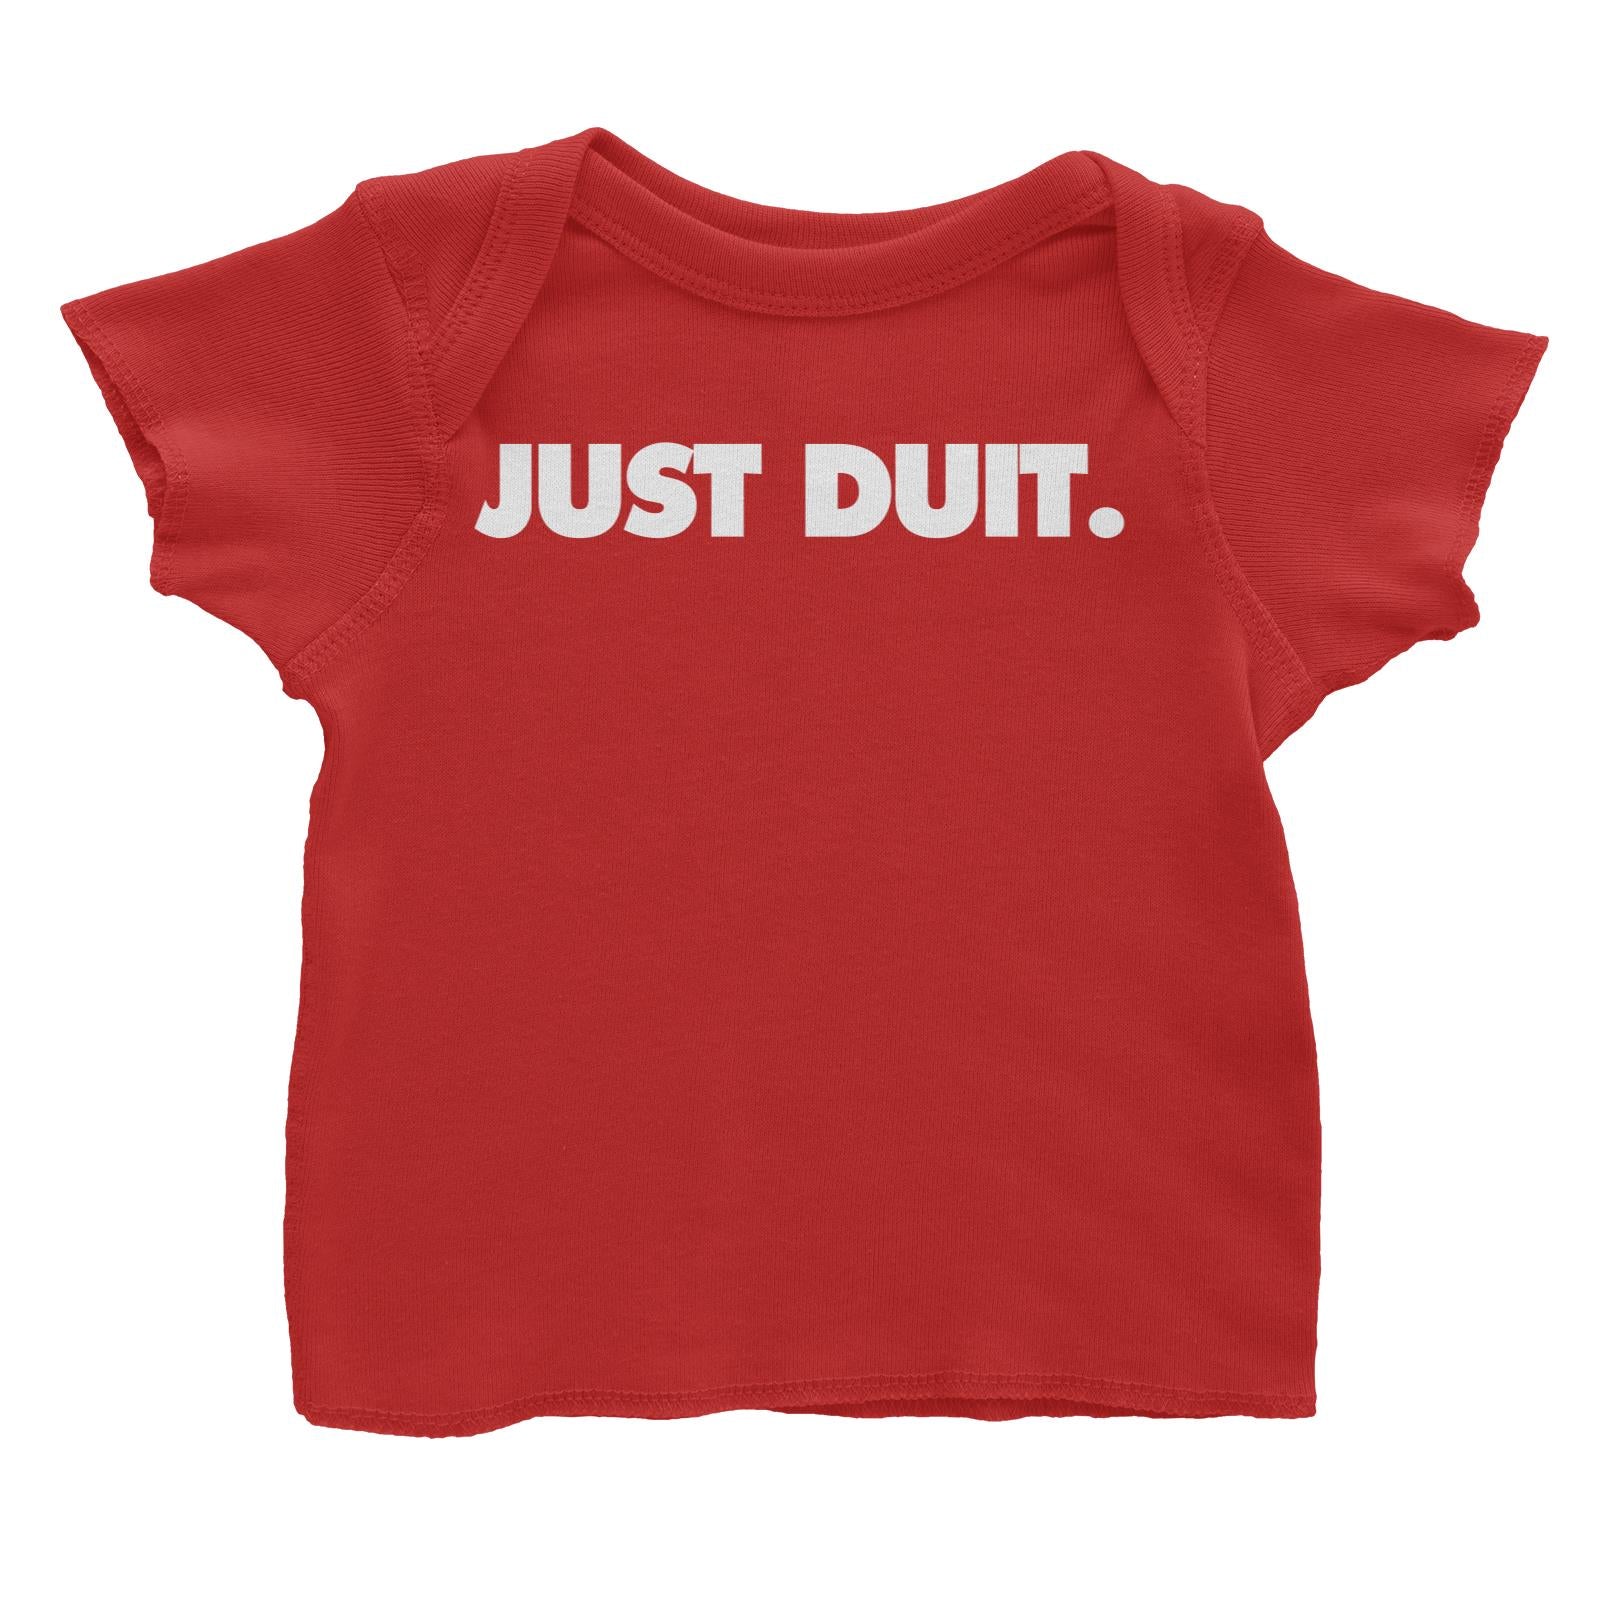 Slang Statement Just Duit Baby T-Shirt